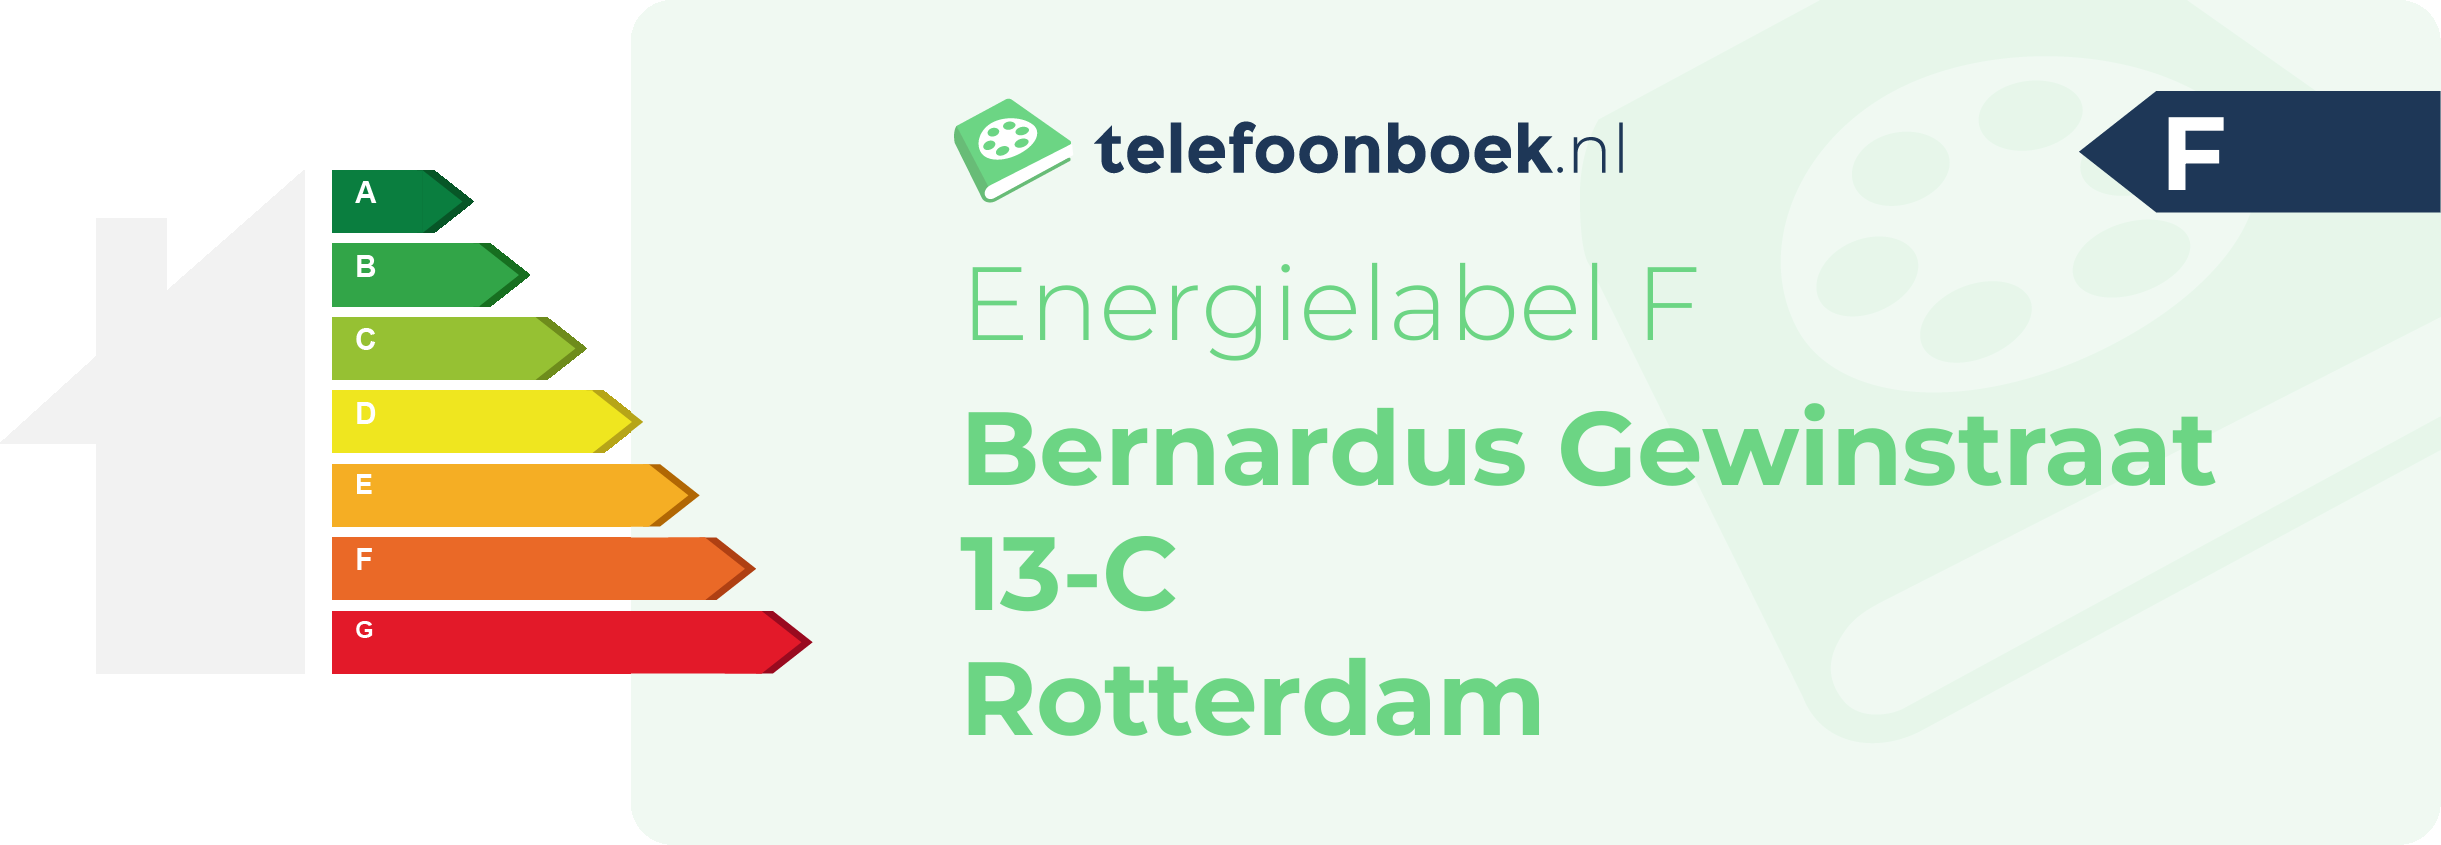 Energielabel Bernardus Gewinstraat 13-C Rotterdam